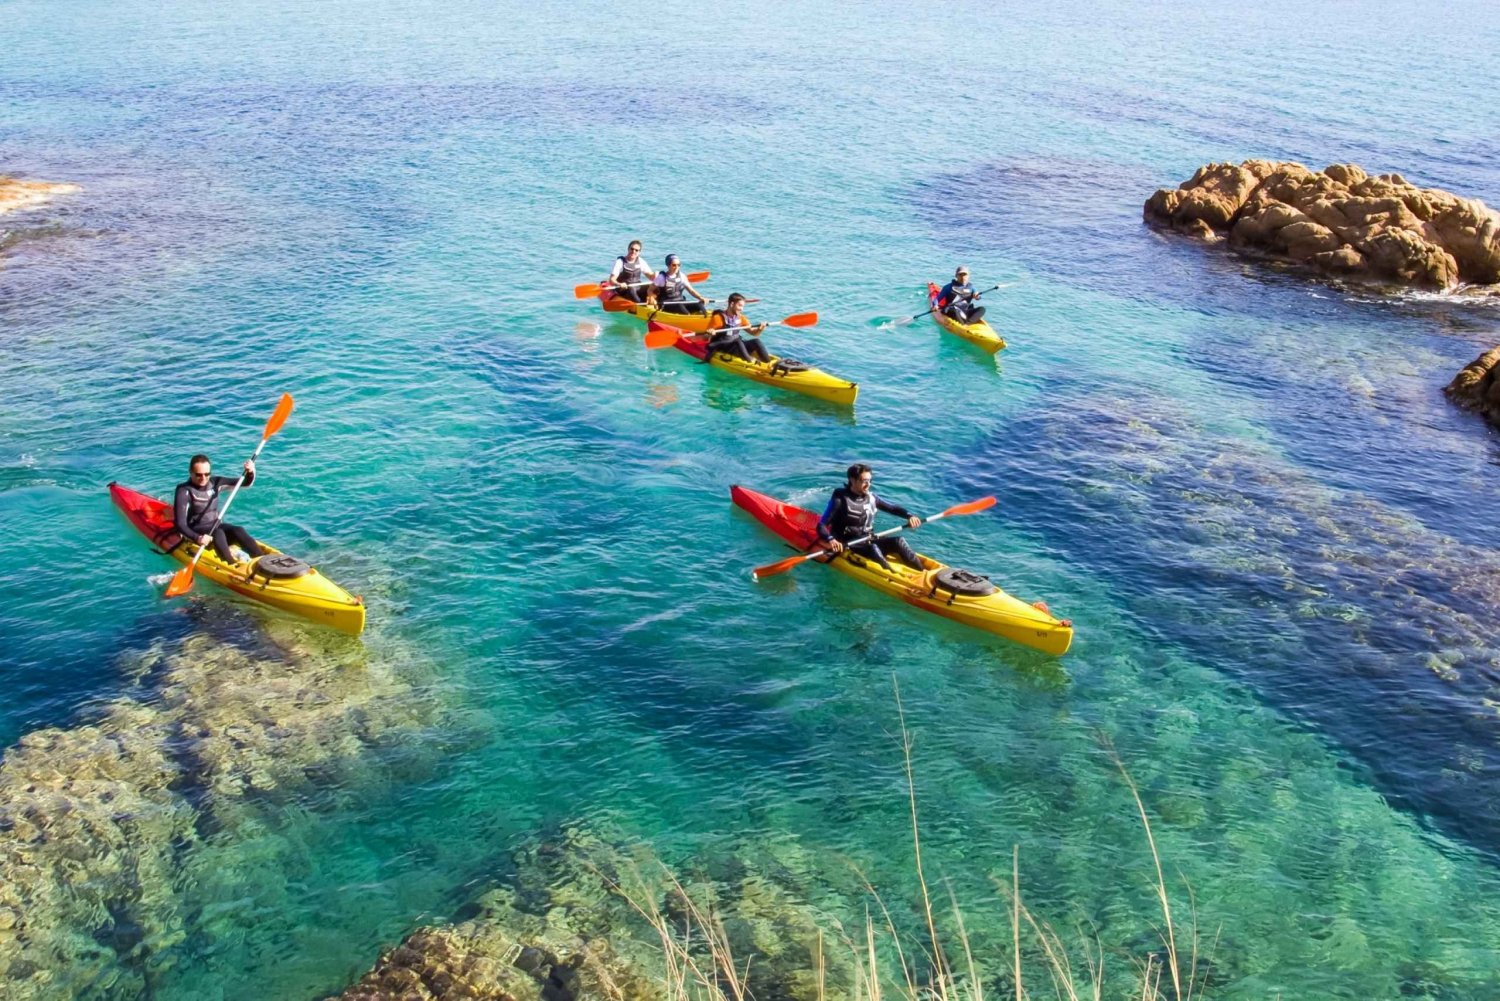 Costa Brava: Sea Caves Kayaking and Snorkeling Tour